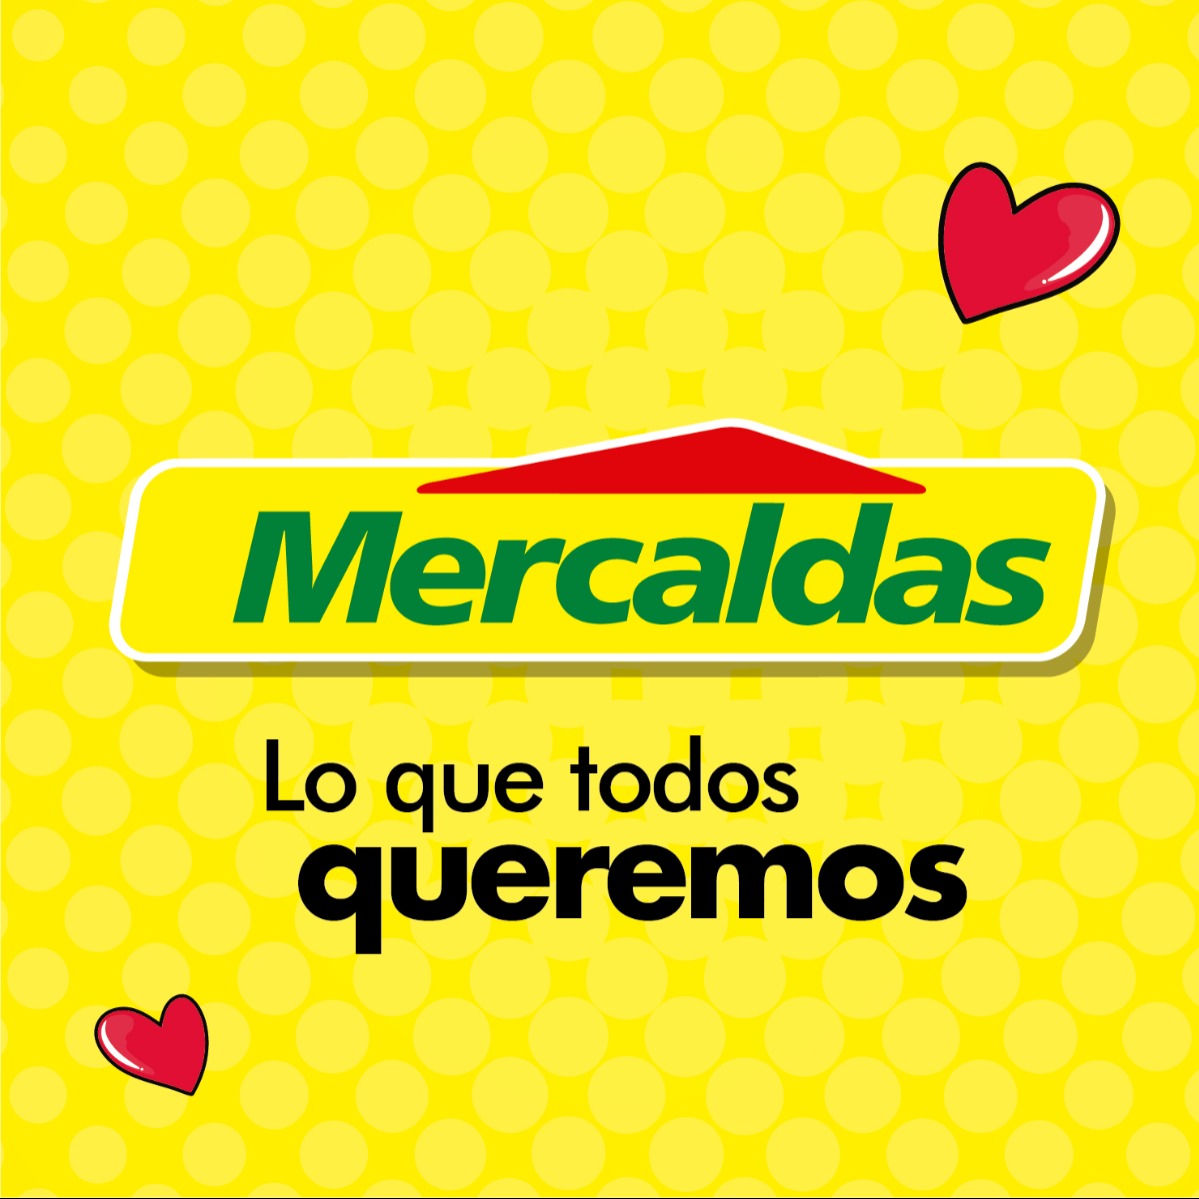 Mercaldas | All social media links, exclusive content& service- Linkr